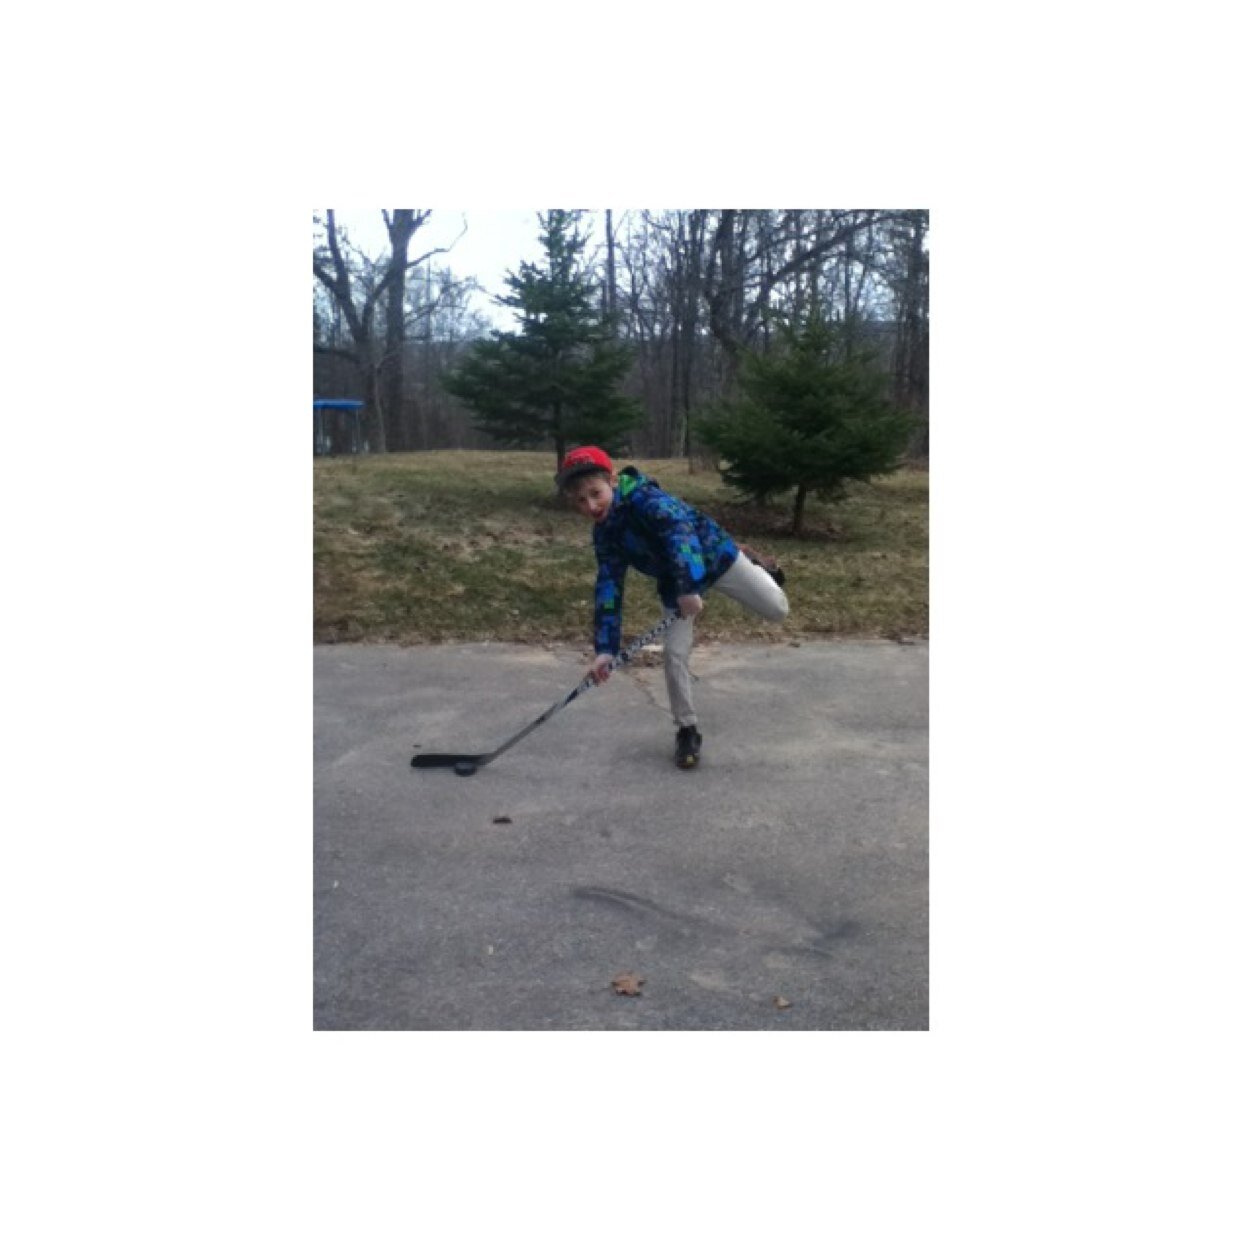 I'm 9yr hockey player favorite colour green favorite sport Hockey #GoleafsGo Follow me on instagram @BeckettHockey3